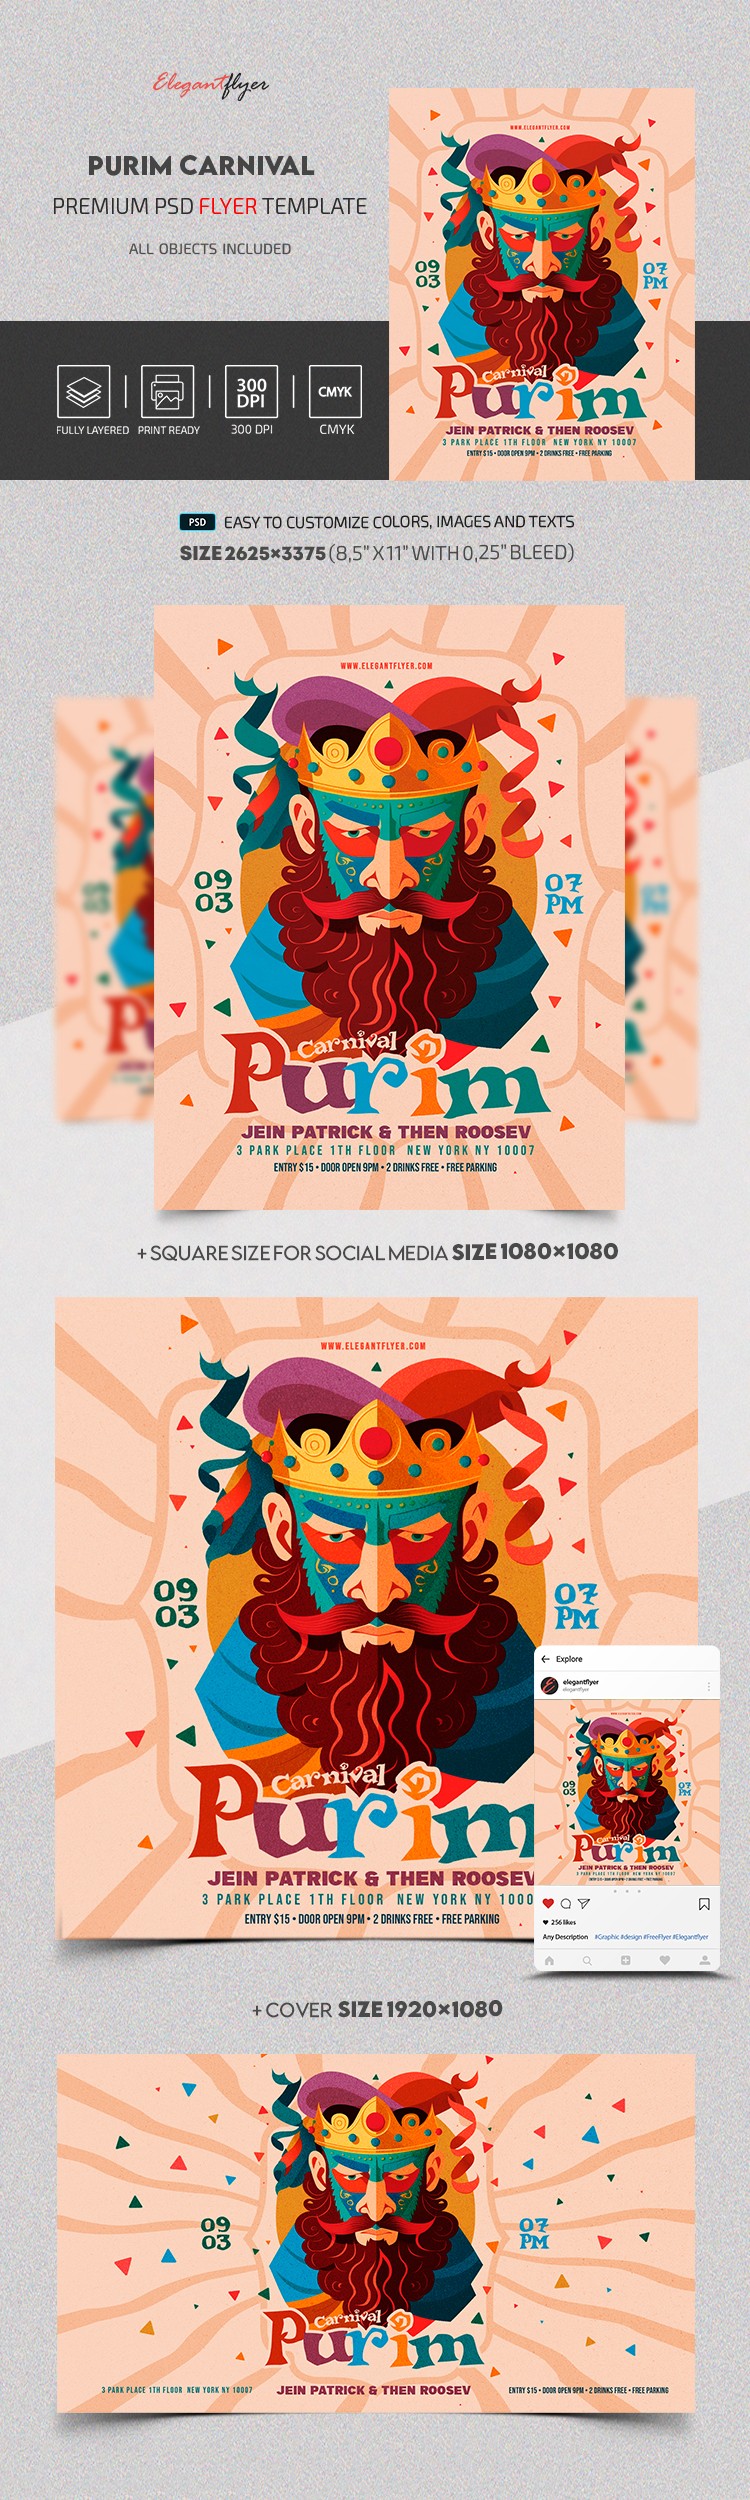 Purim Carnevale by ElegantFlyer